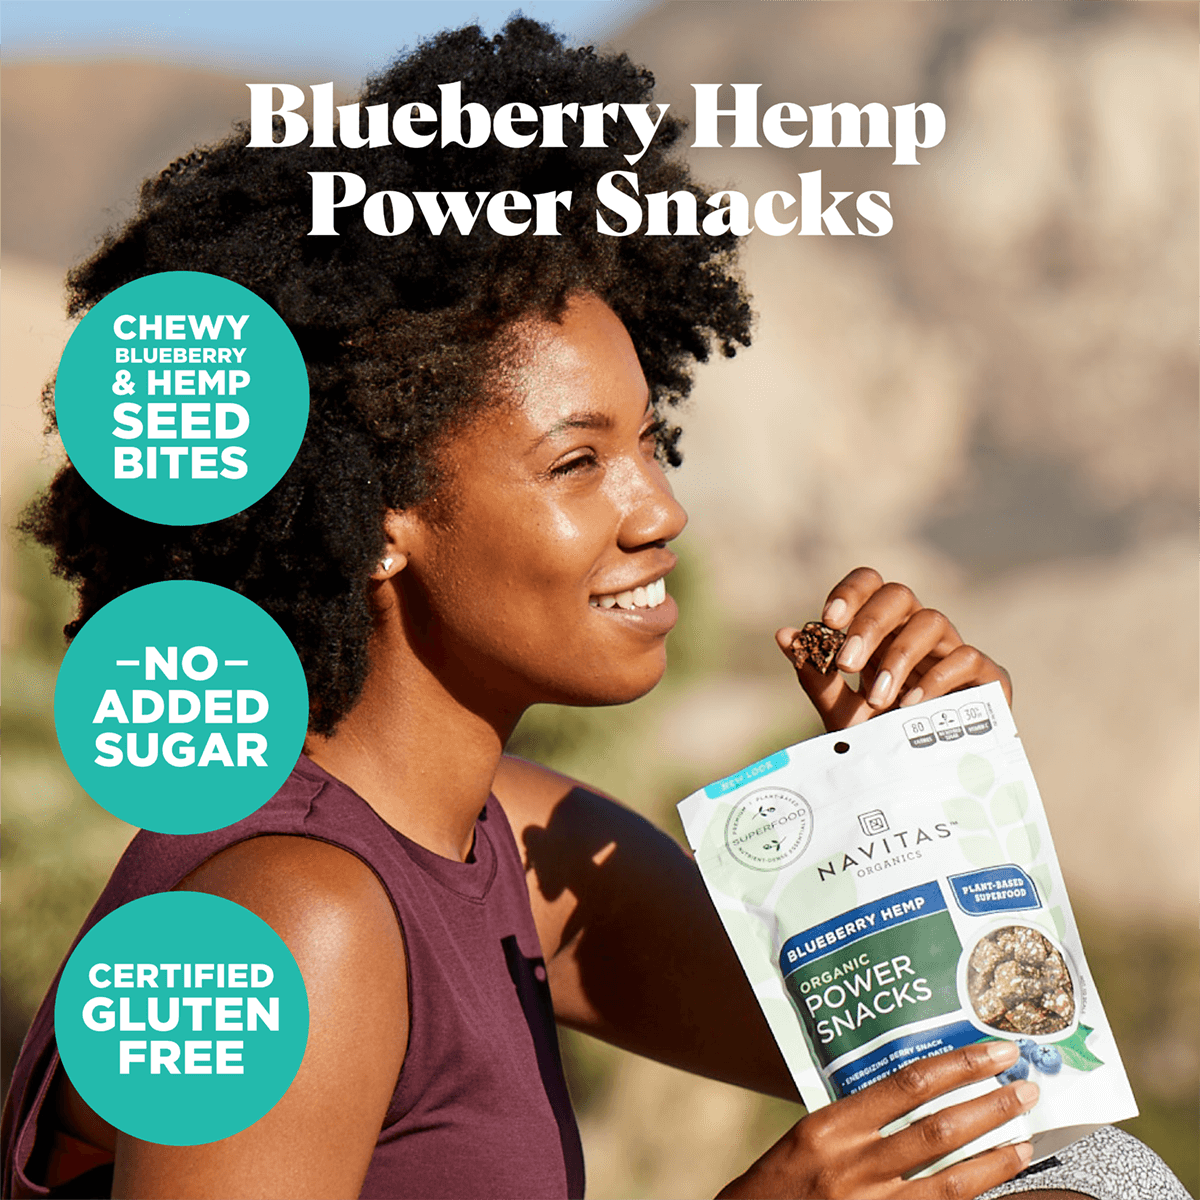 Power Snacks Blueberry Hemp